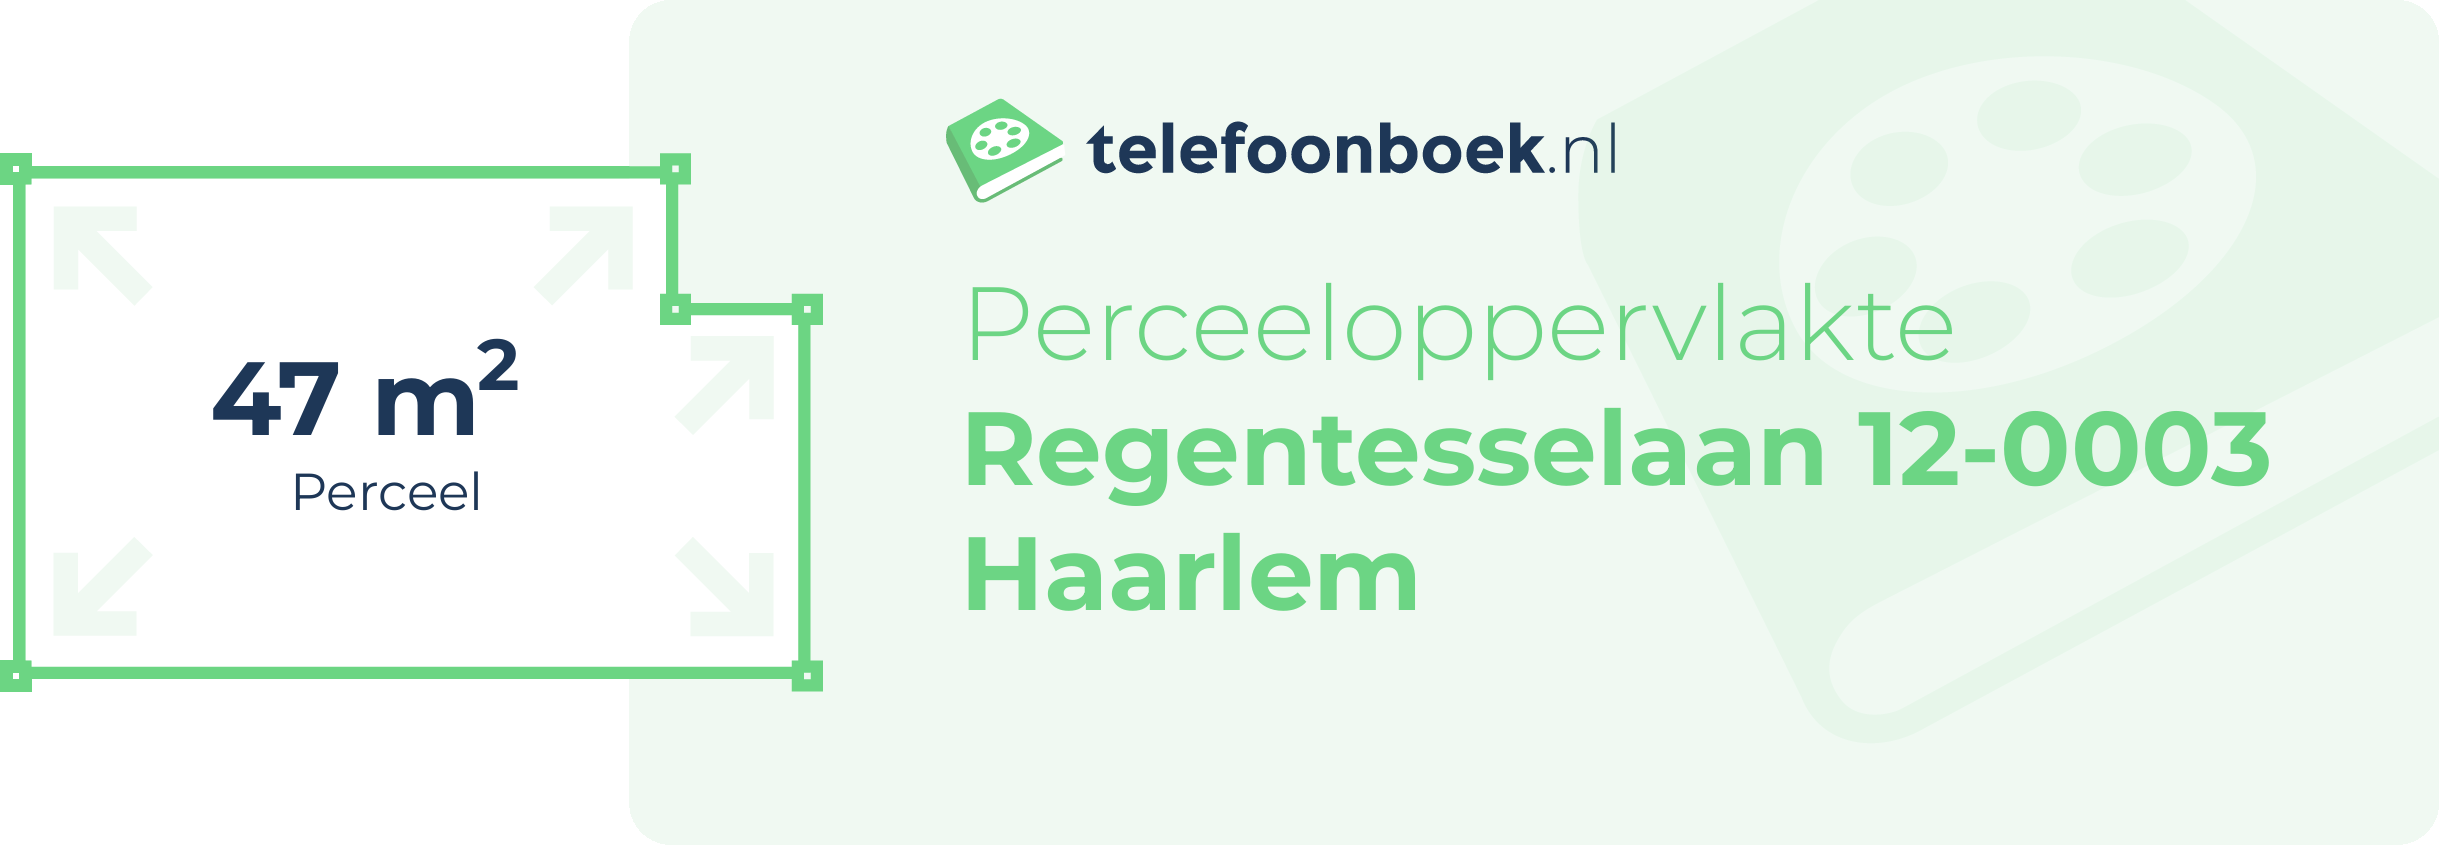 Perceeloppervlakte Regentesselaan 12-0003 Haarlem